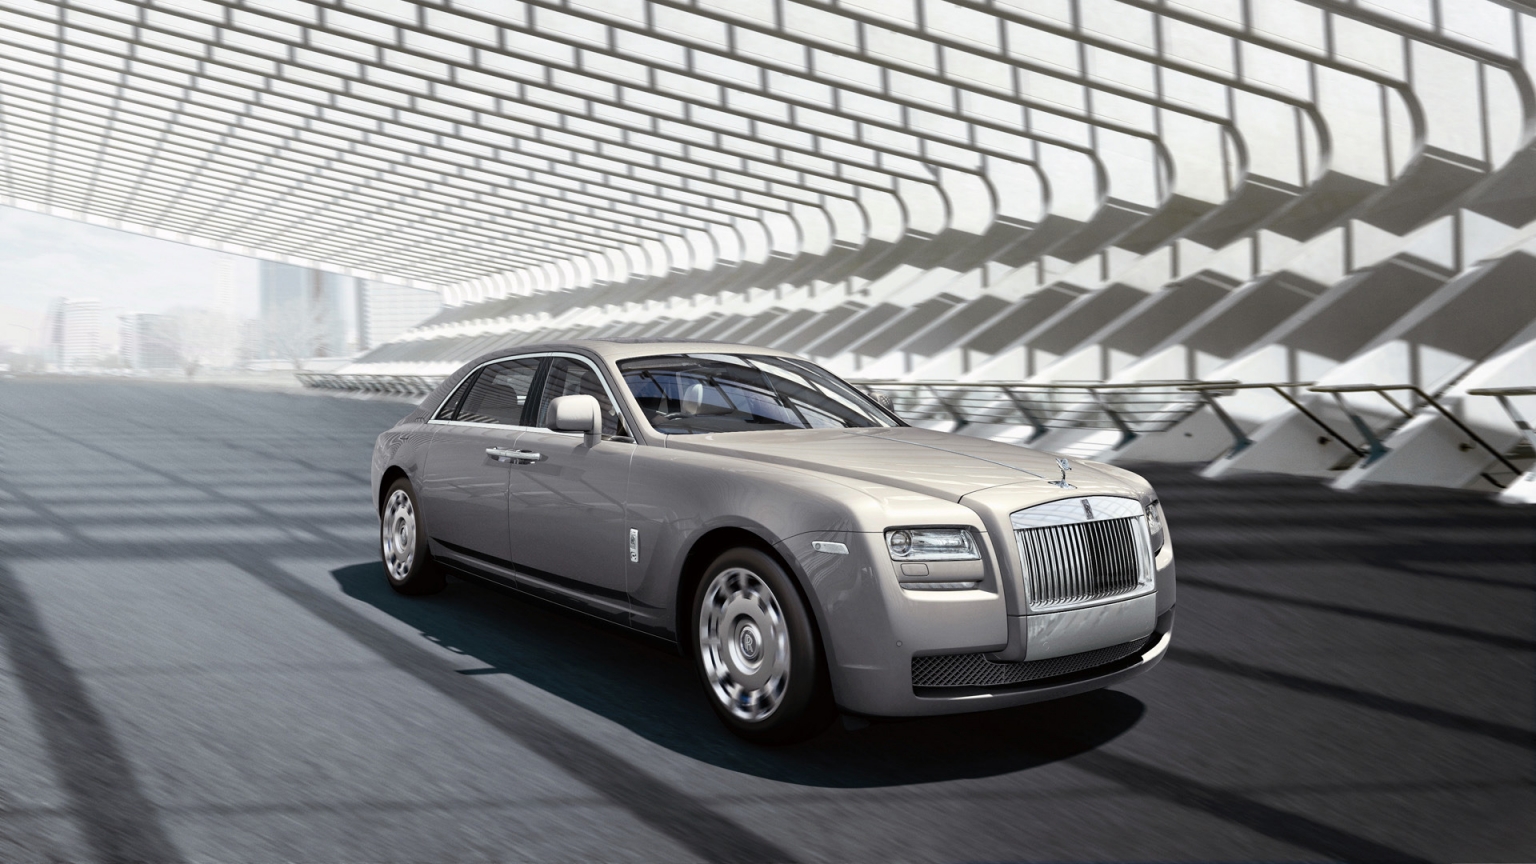 2011 Rolls Royce Ghost for 1536 x 864 HDTV resolution